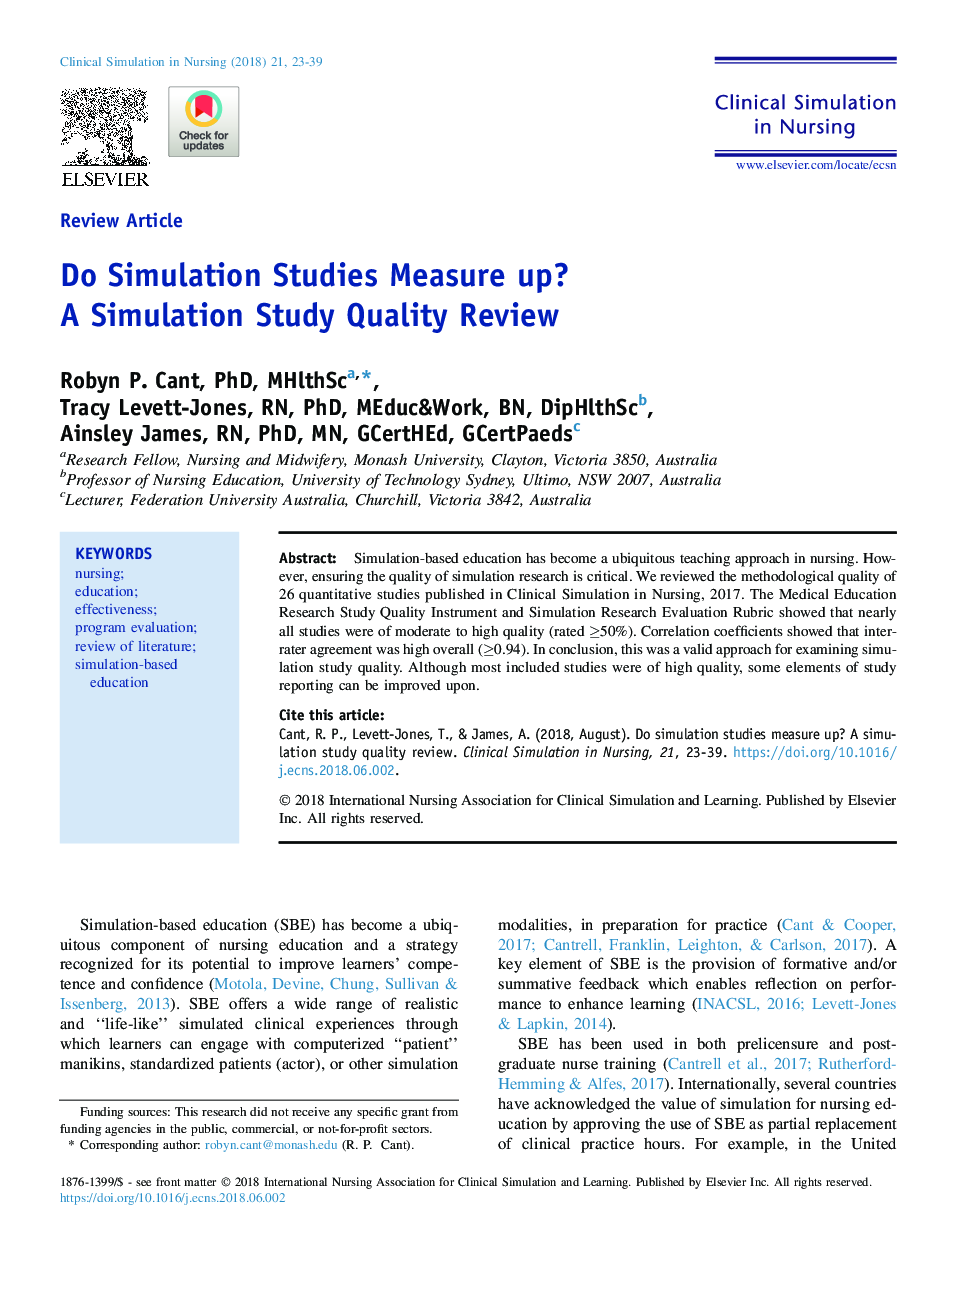 Do Simulation Studies Measure up? A Simulation Study Quality Review